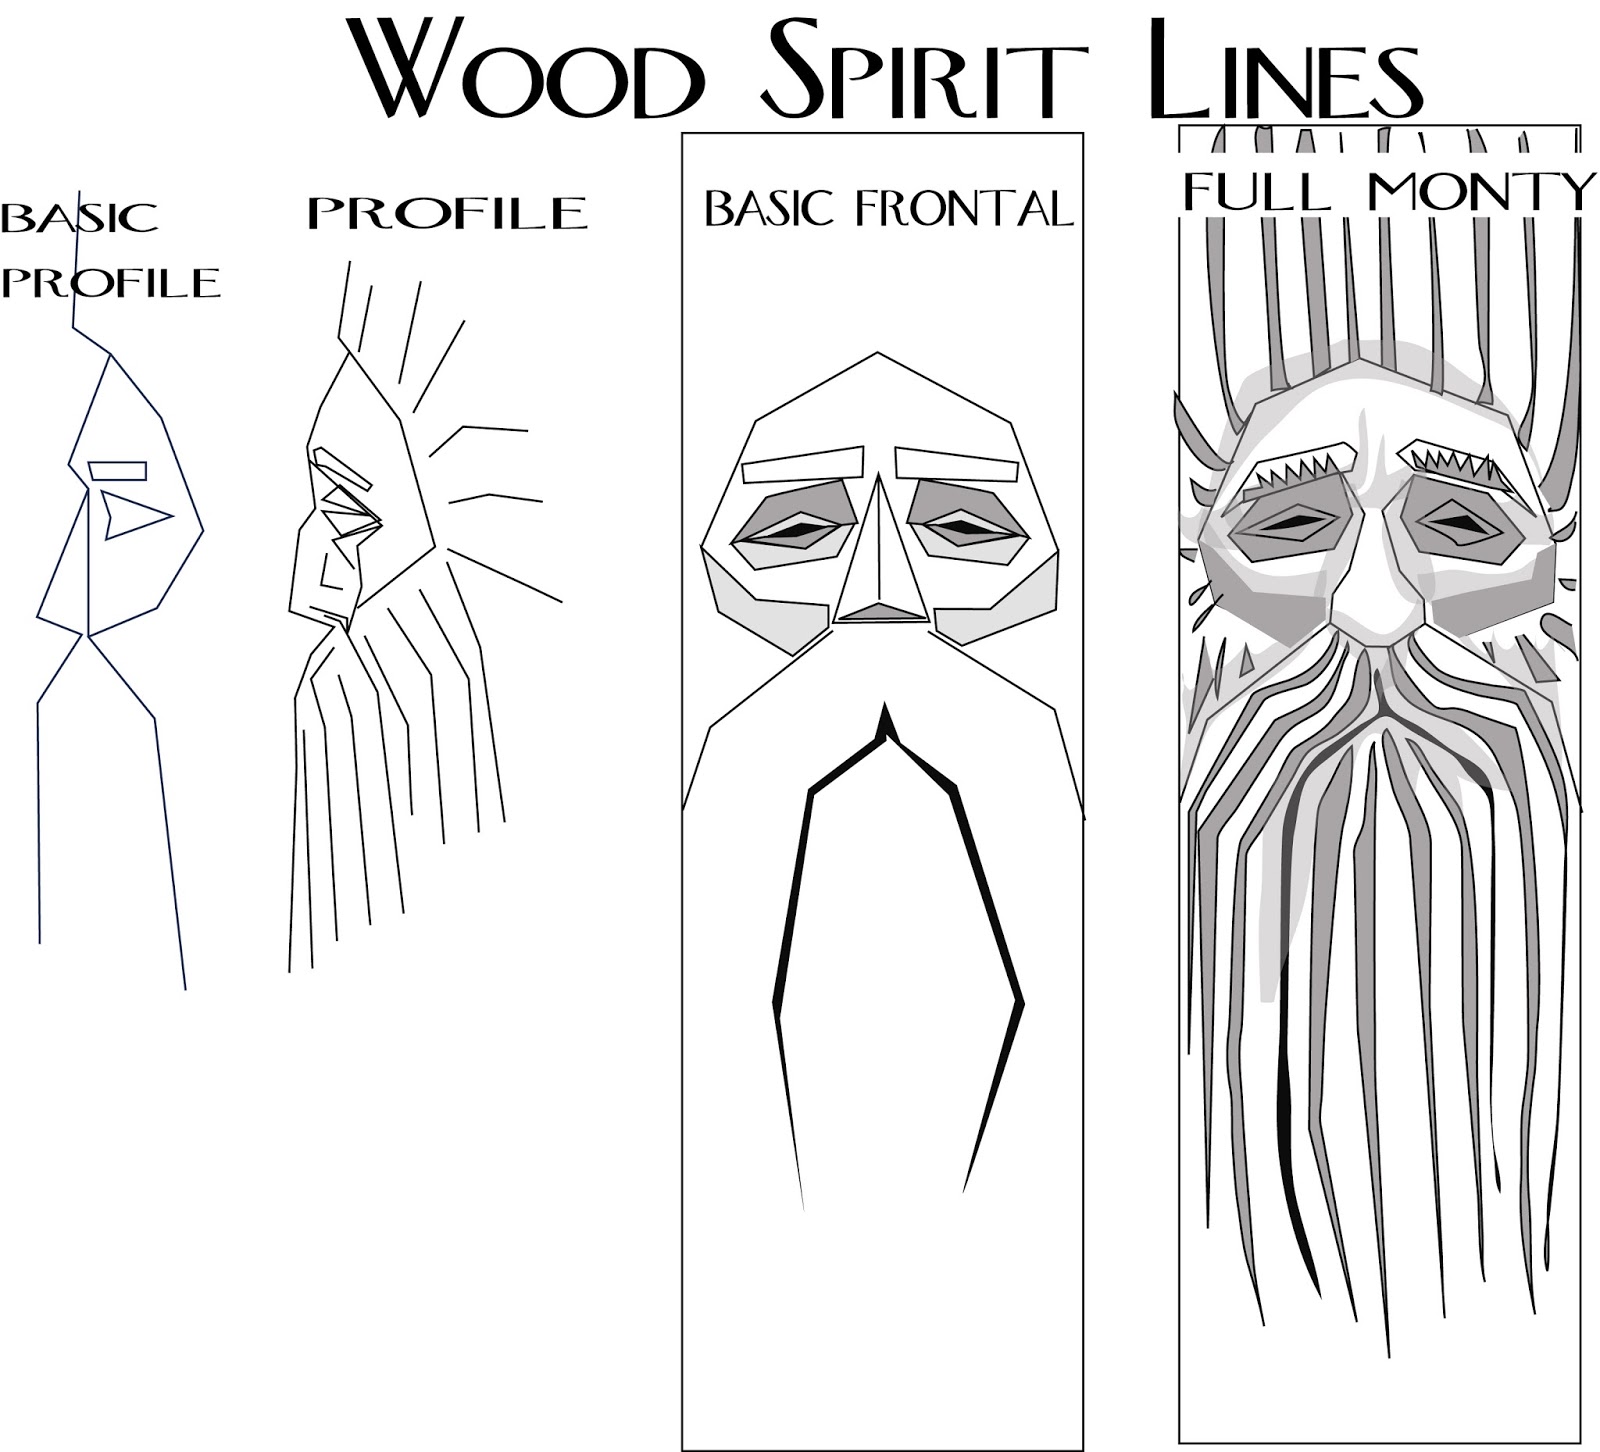 Knife only wood spirit video supplement illustration